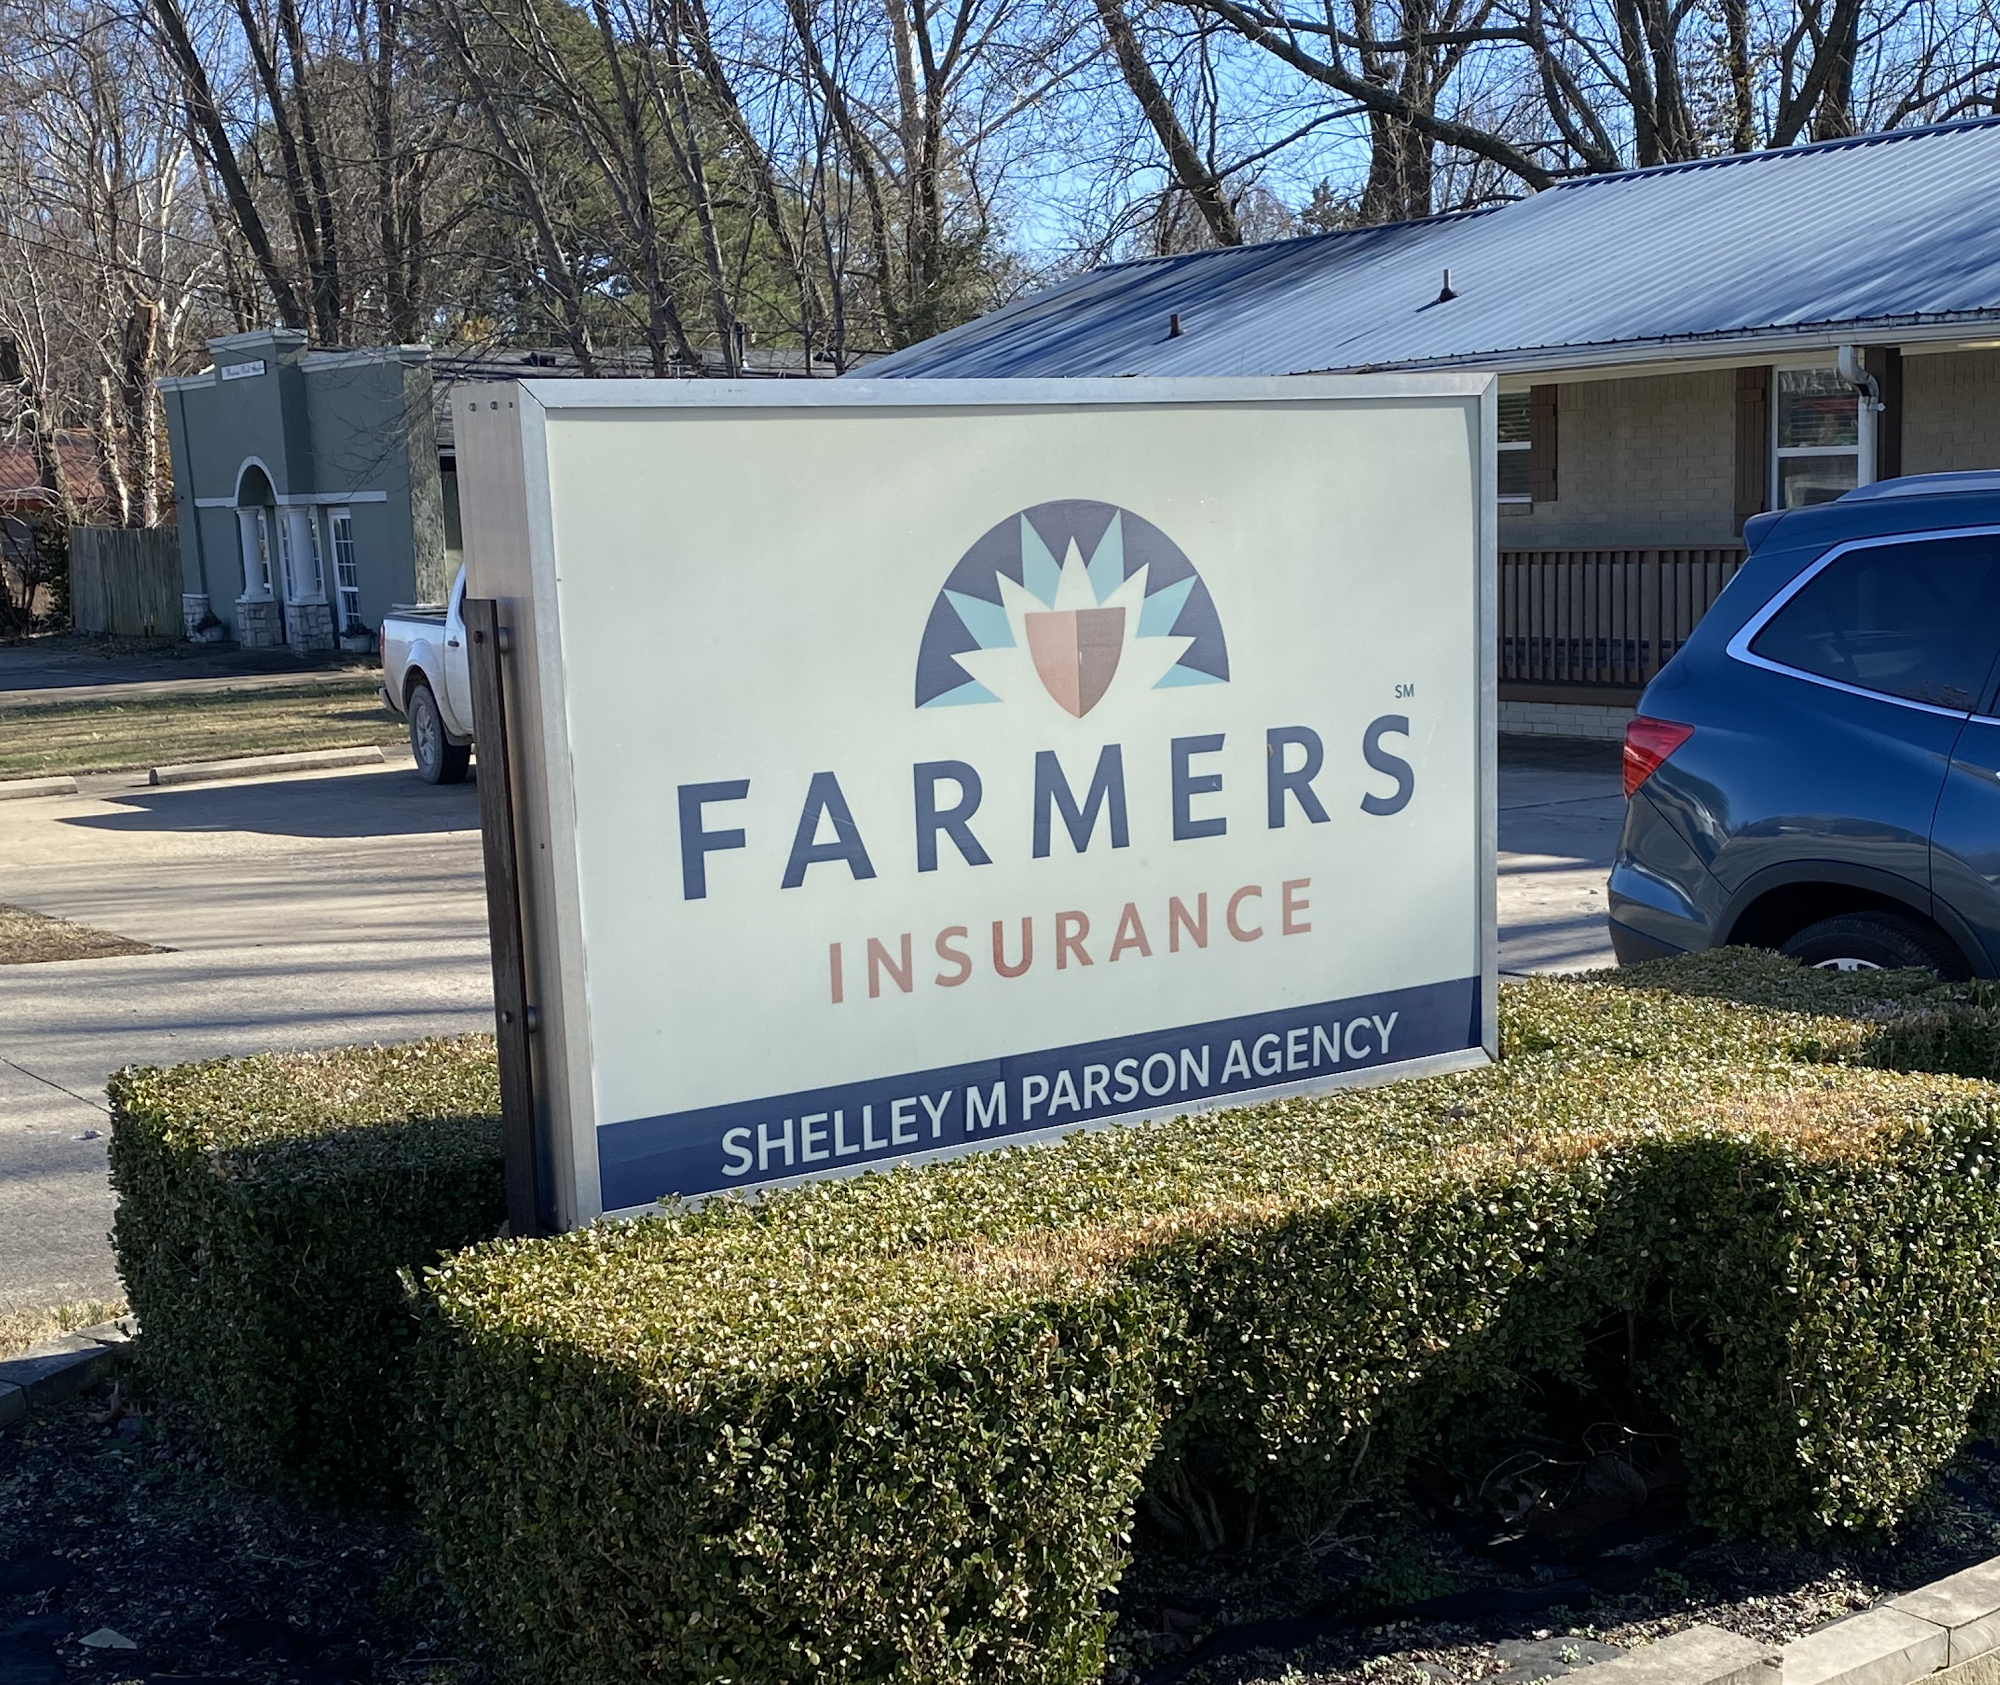 Farmers Insurance - Shelley Parson Agency